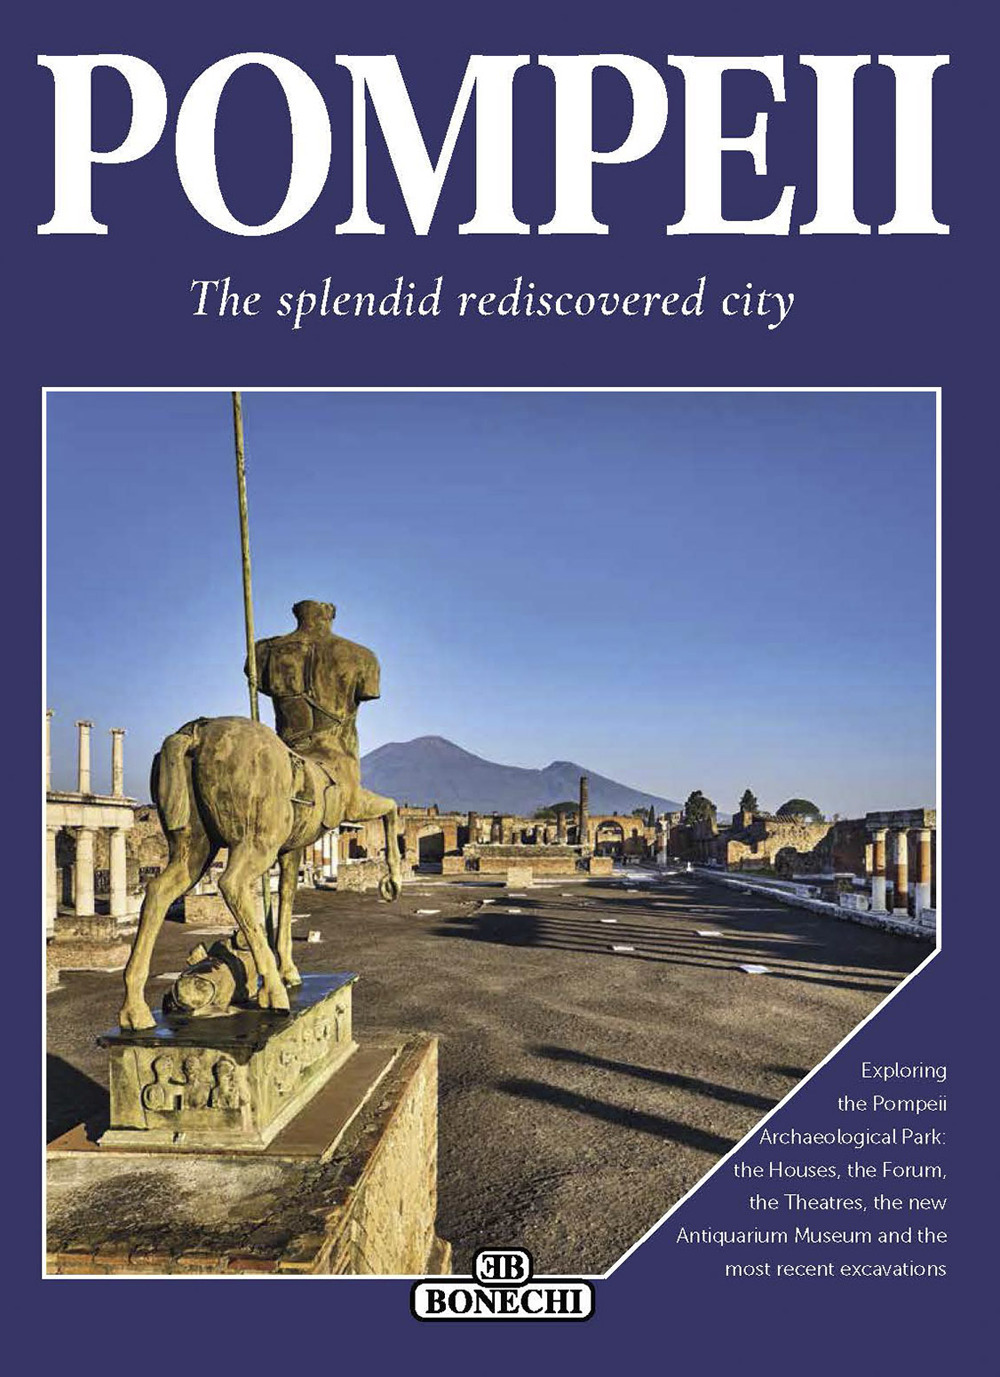 Pompeii. The splendid rediscovered city